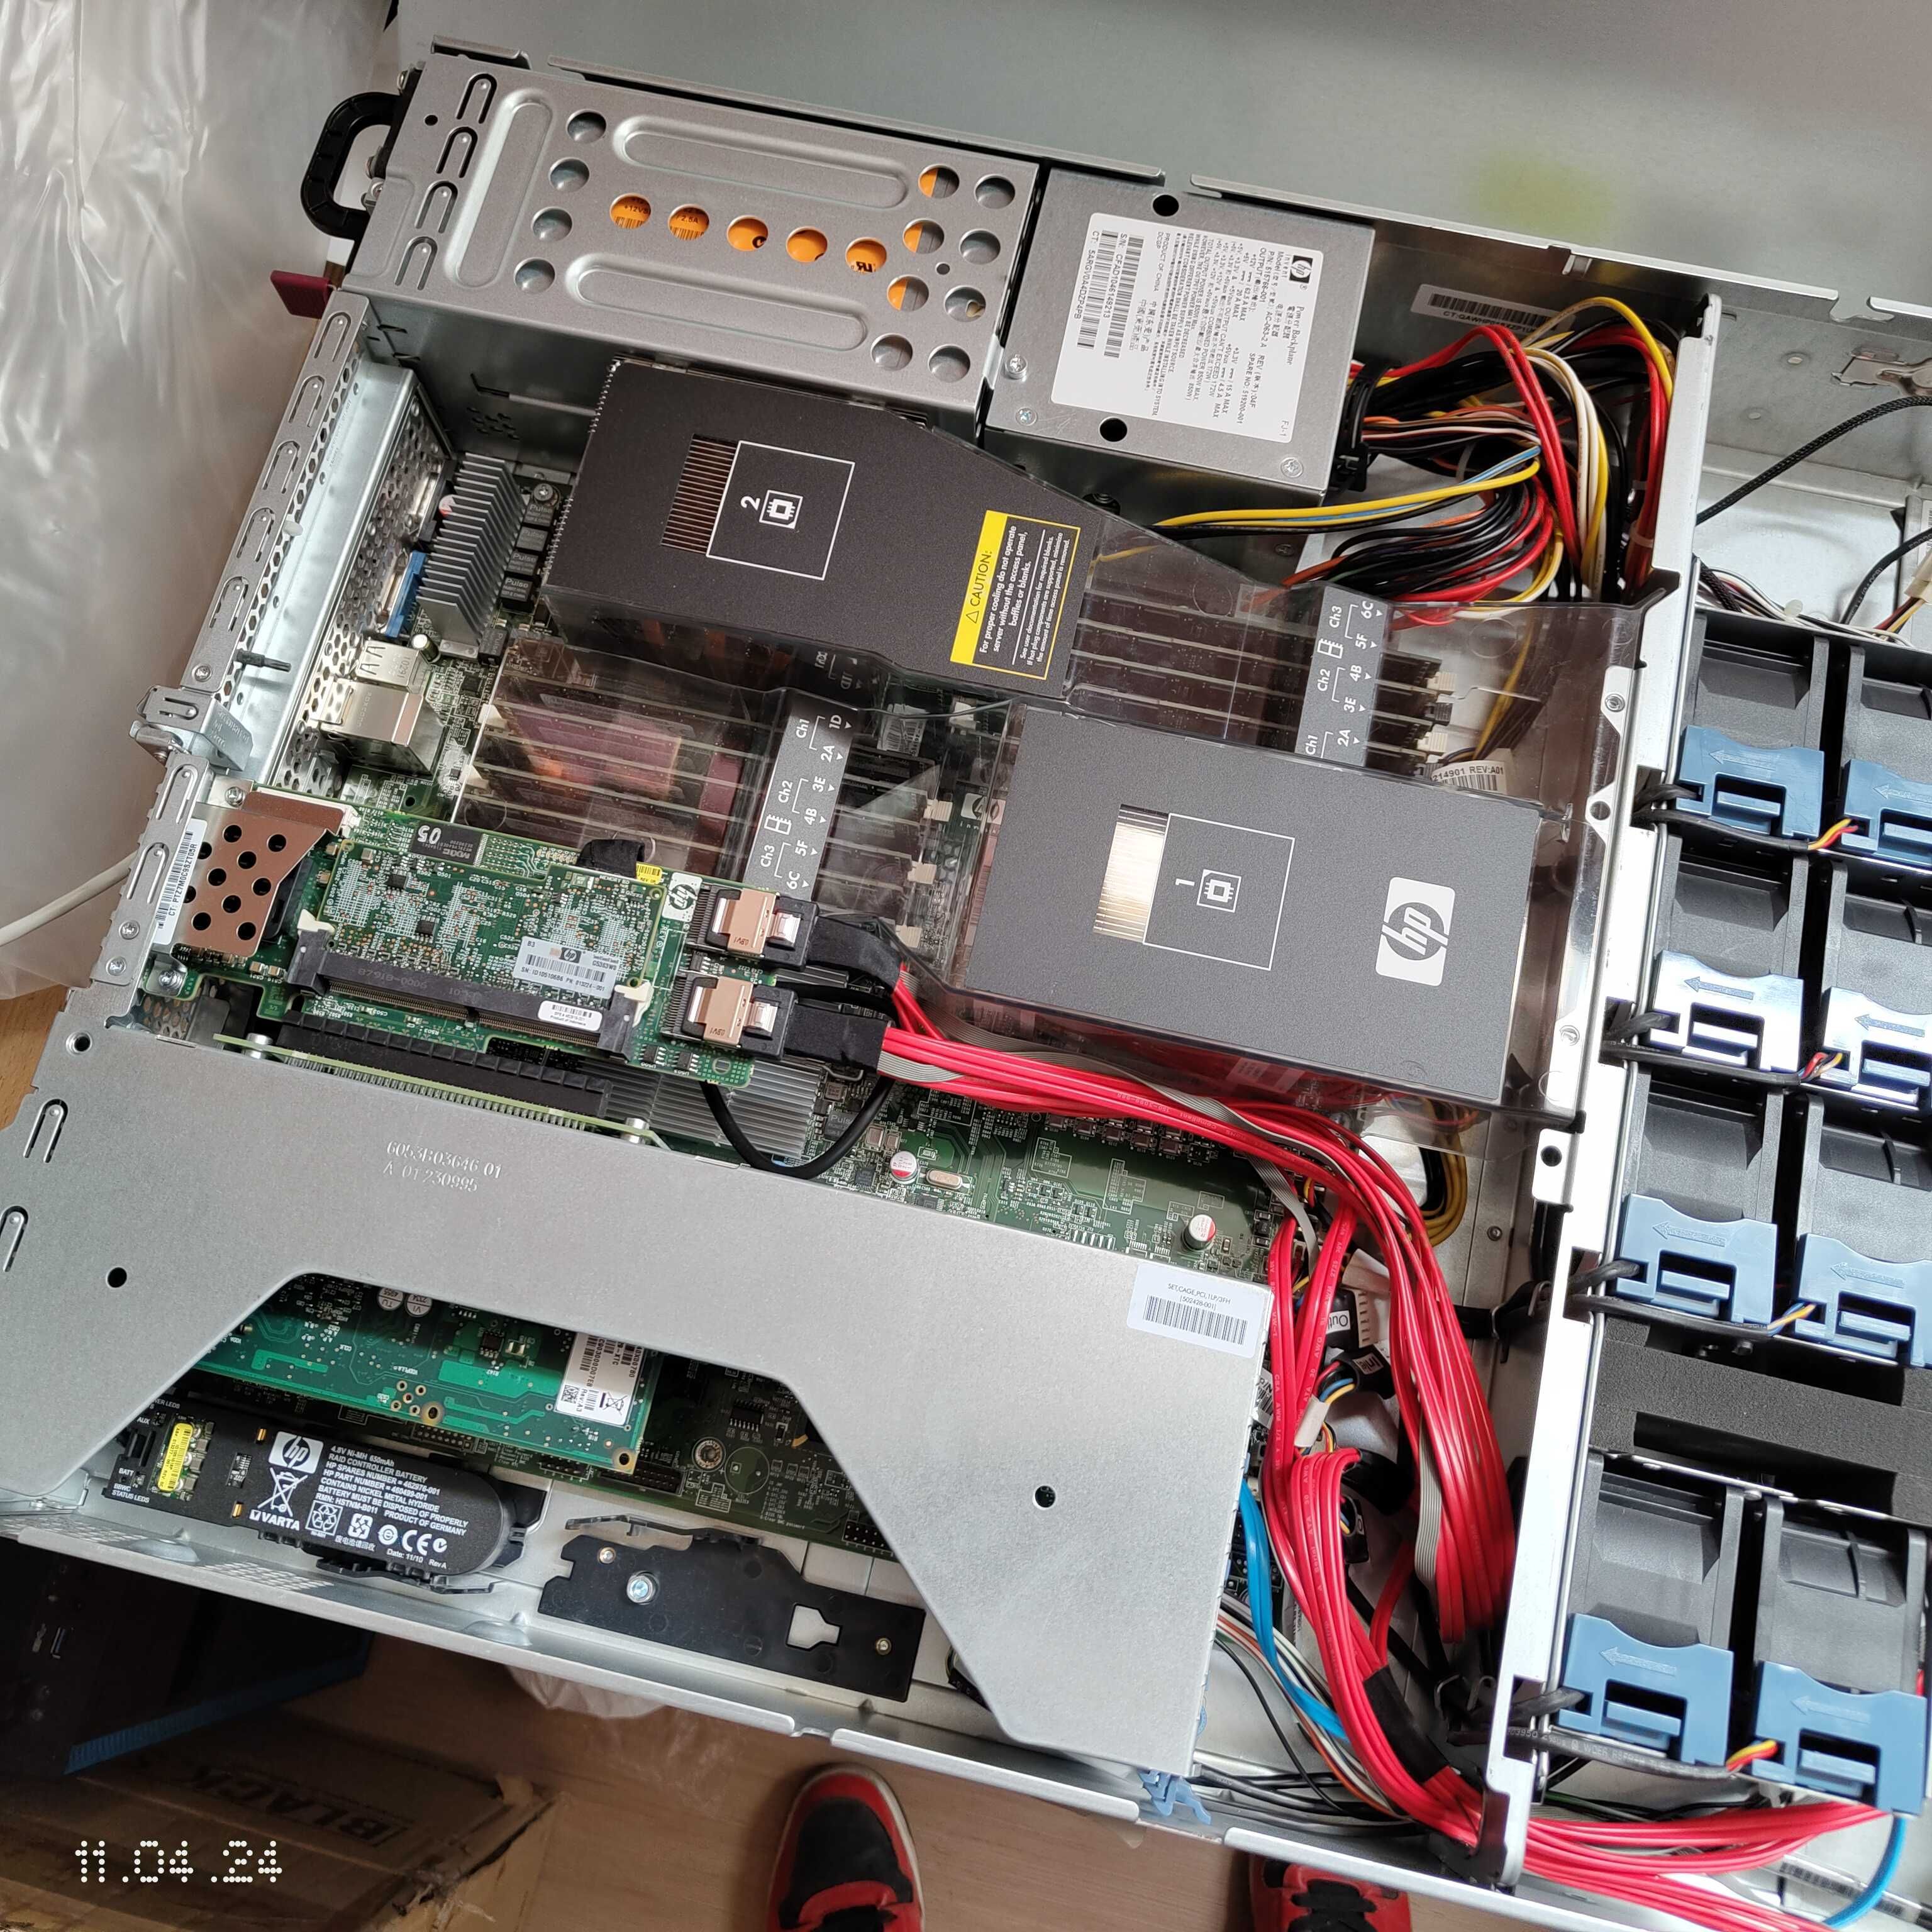 HP Proliant DL180 G6 2U Rack Server